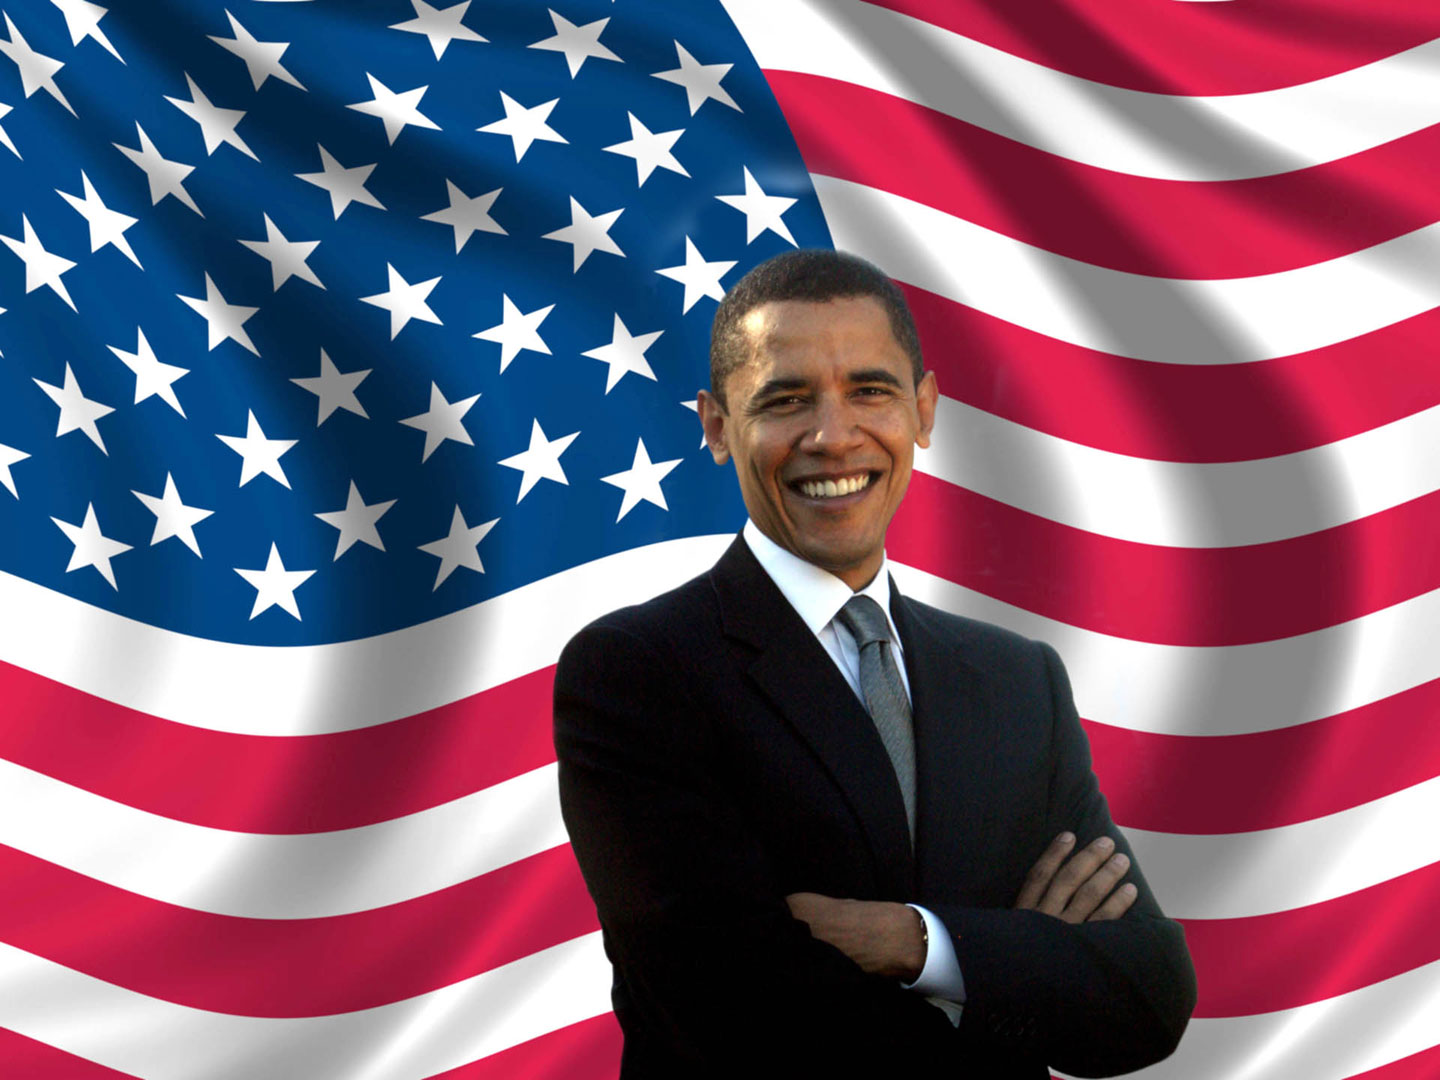 Mr. President Barack Obama